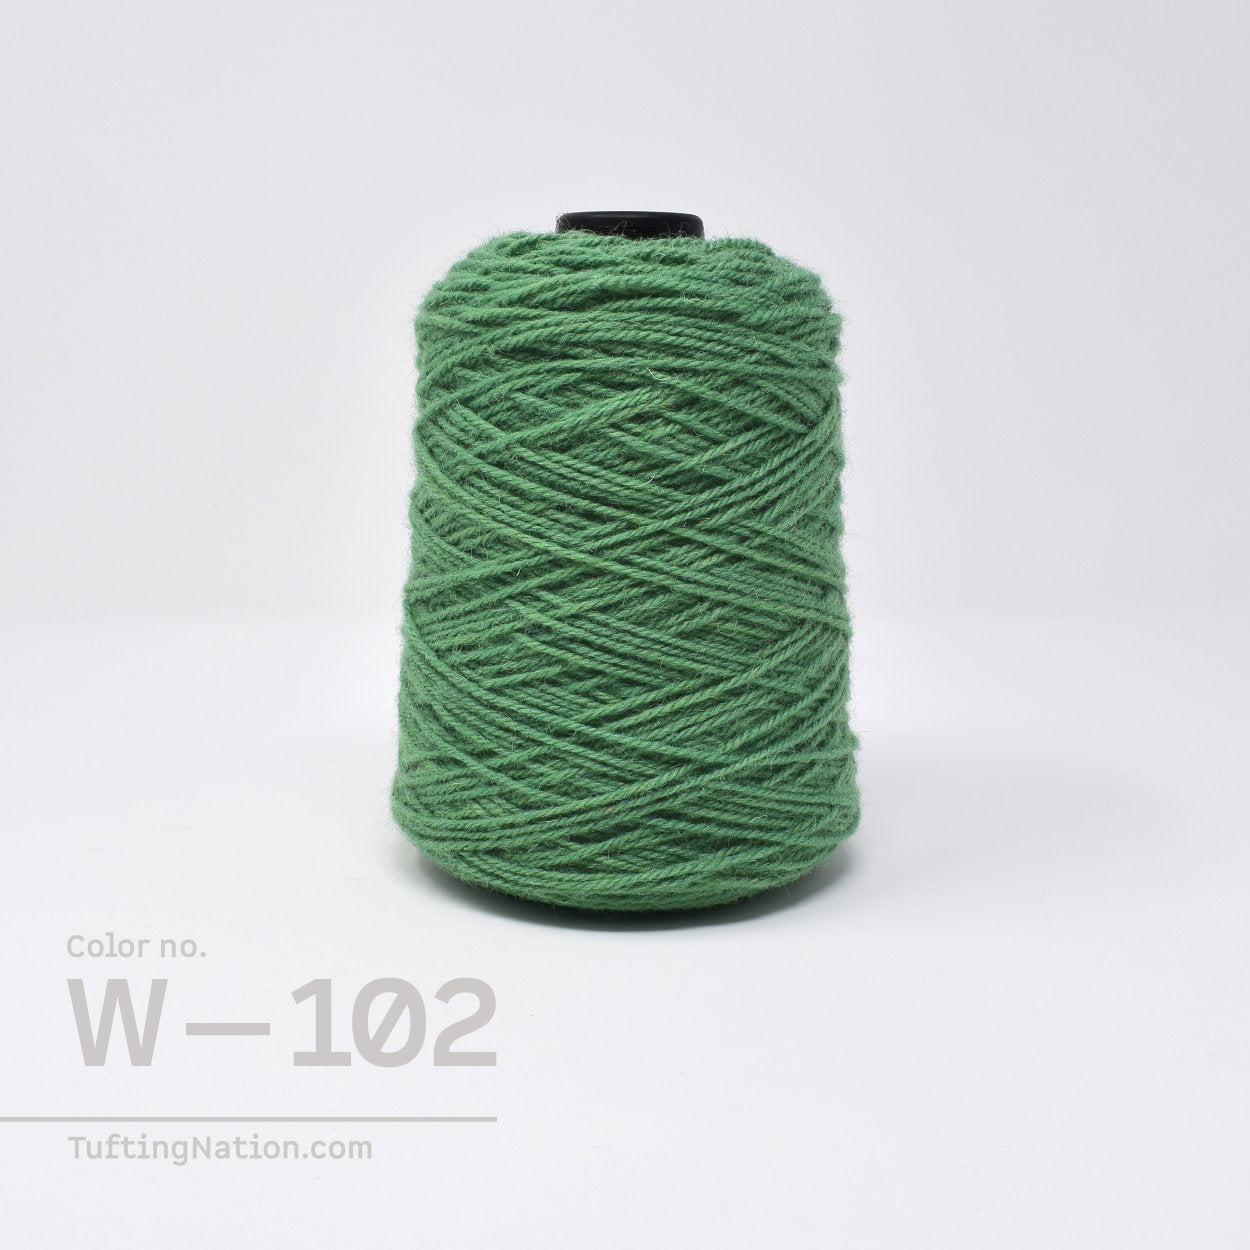 Green Rug Gun Yarn for Rug Tufting and Wall Tapestry Weaving | TuftingNation